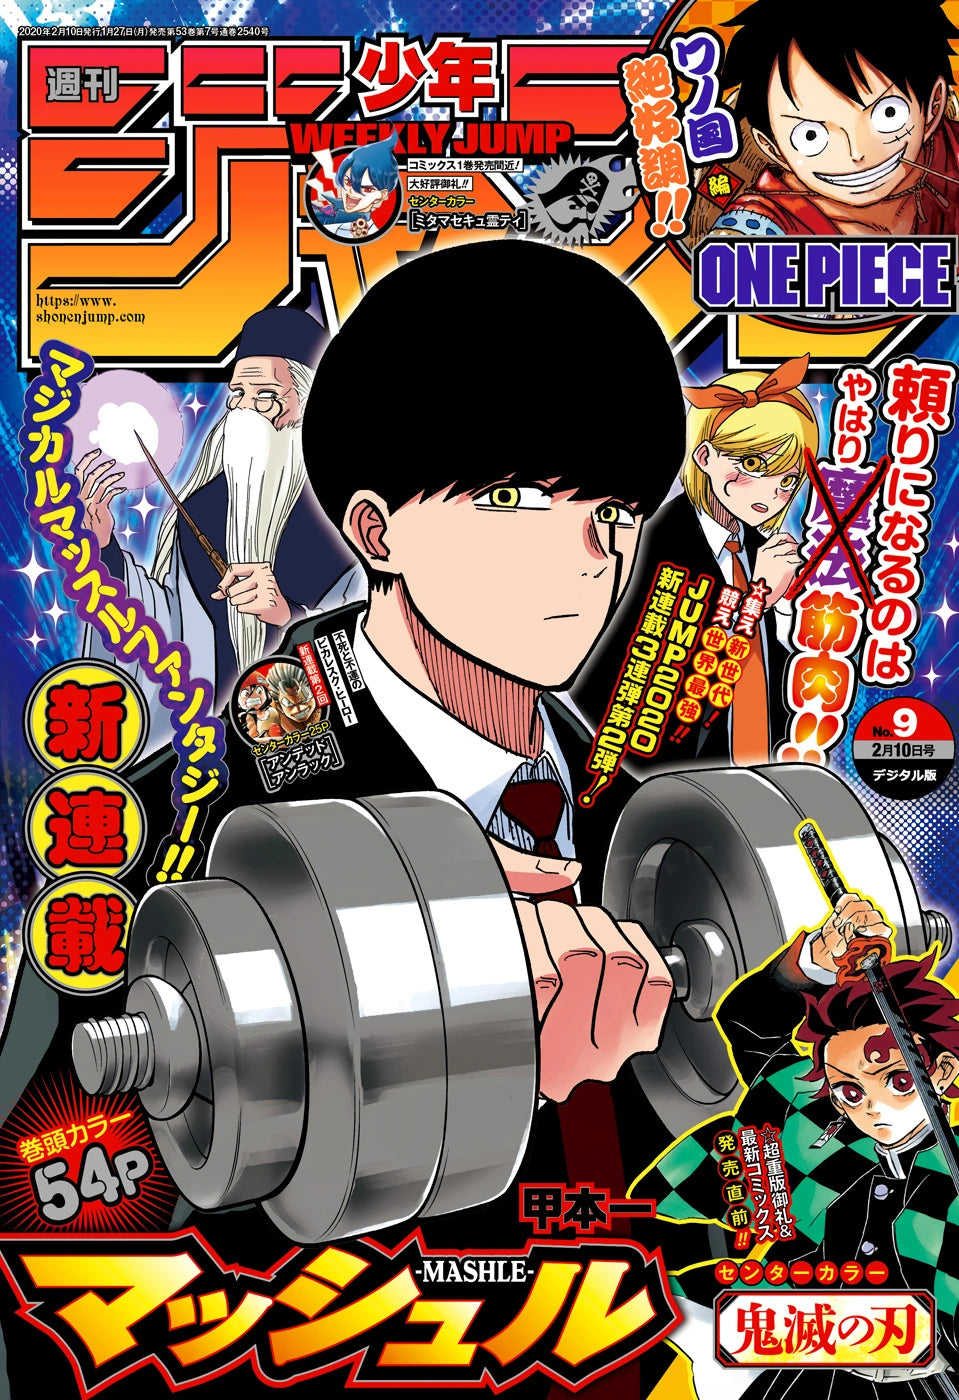 Weekly Shonen Jump #09, 2020